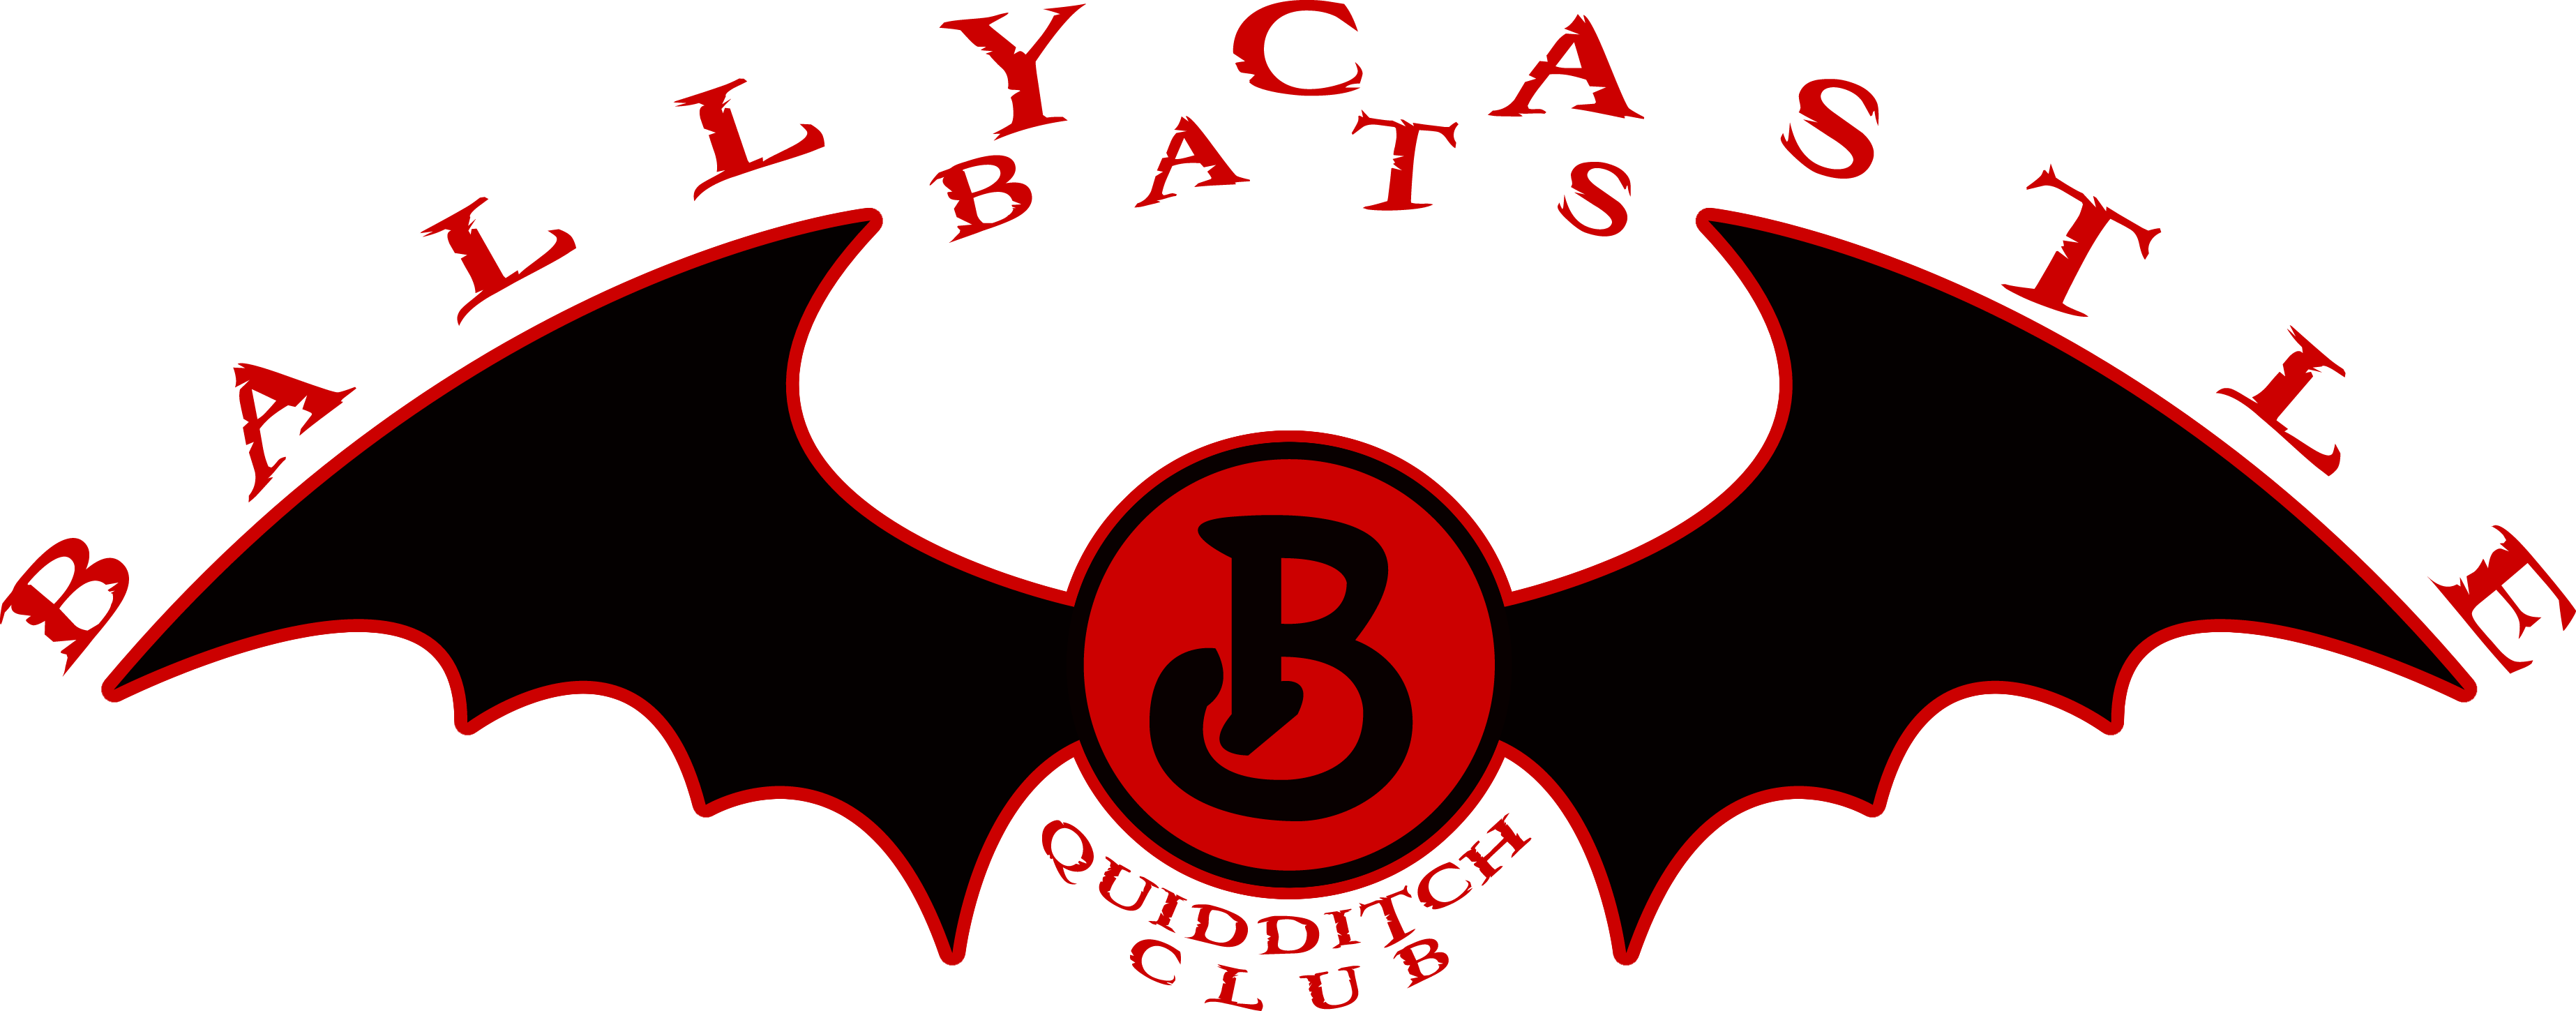 Bats Logo - Ballycastle Bats logo 2